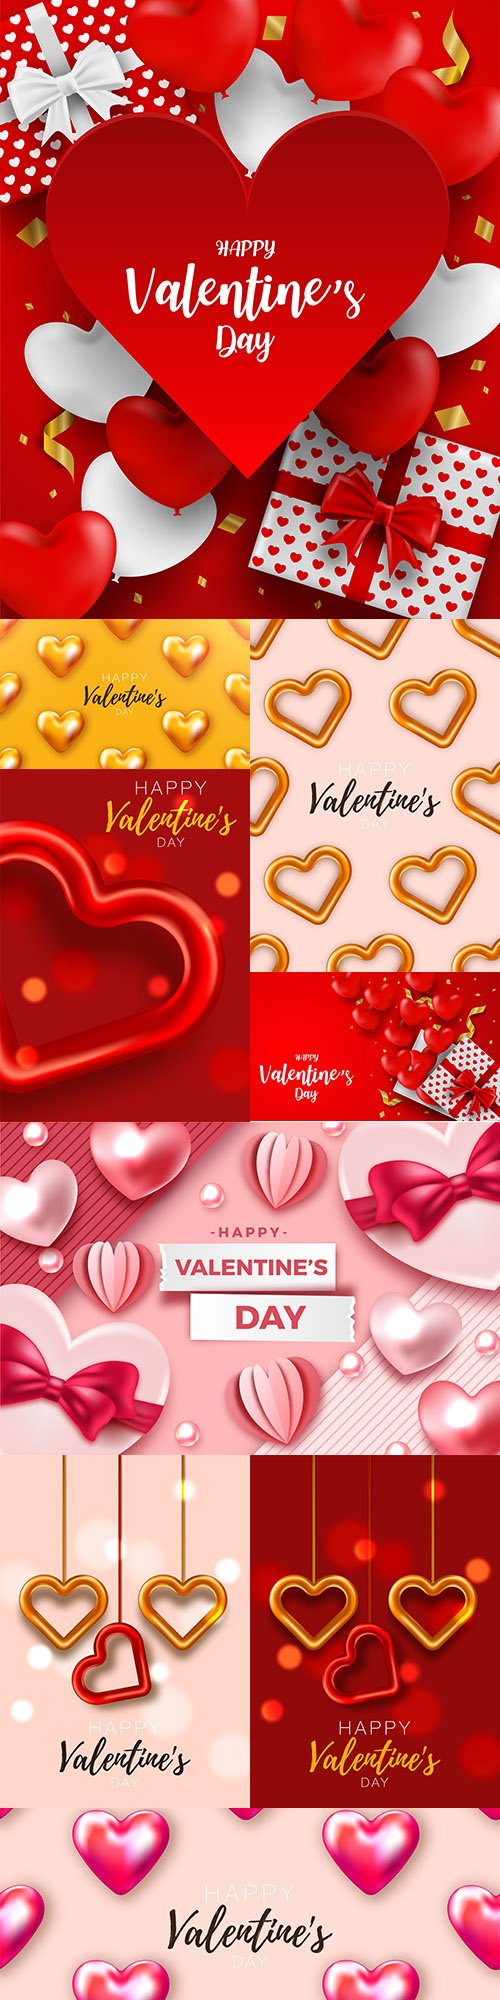 Happy Valentine's Day romantic decorative illustrations 43